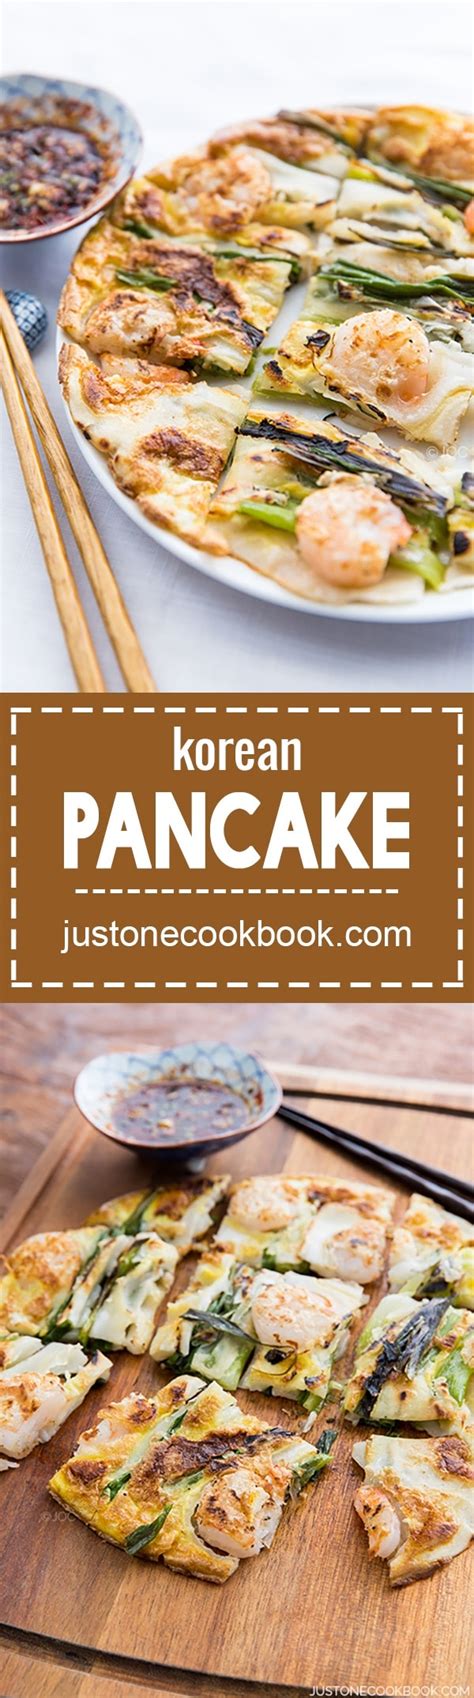 korean pancake just one cookbook